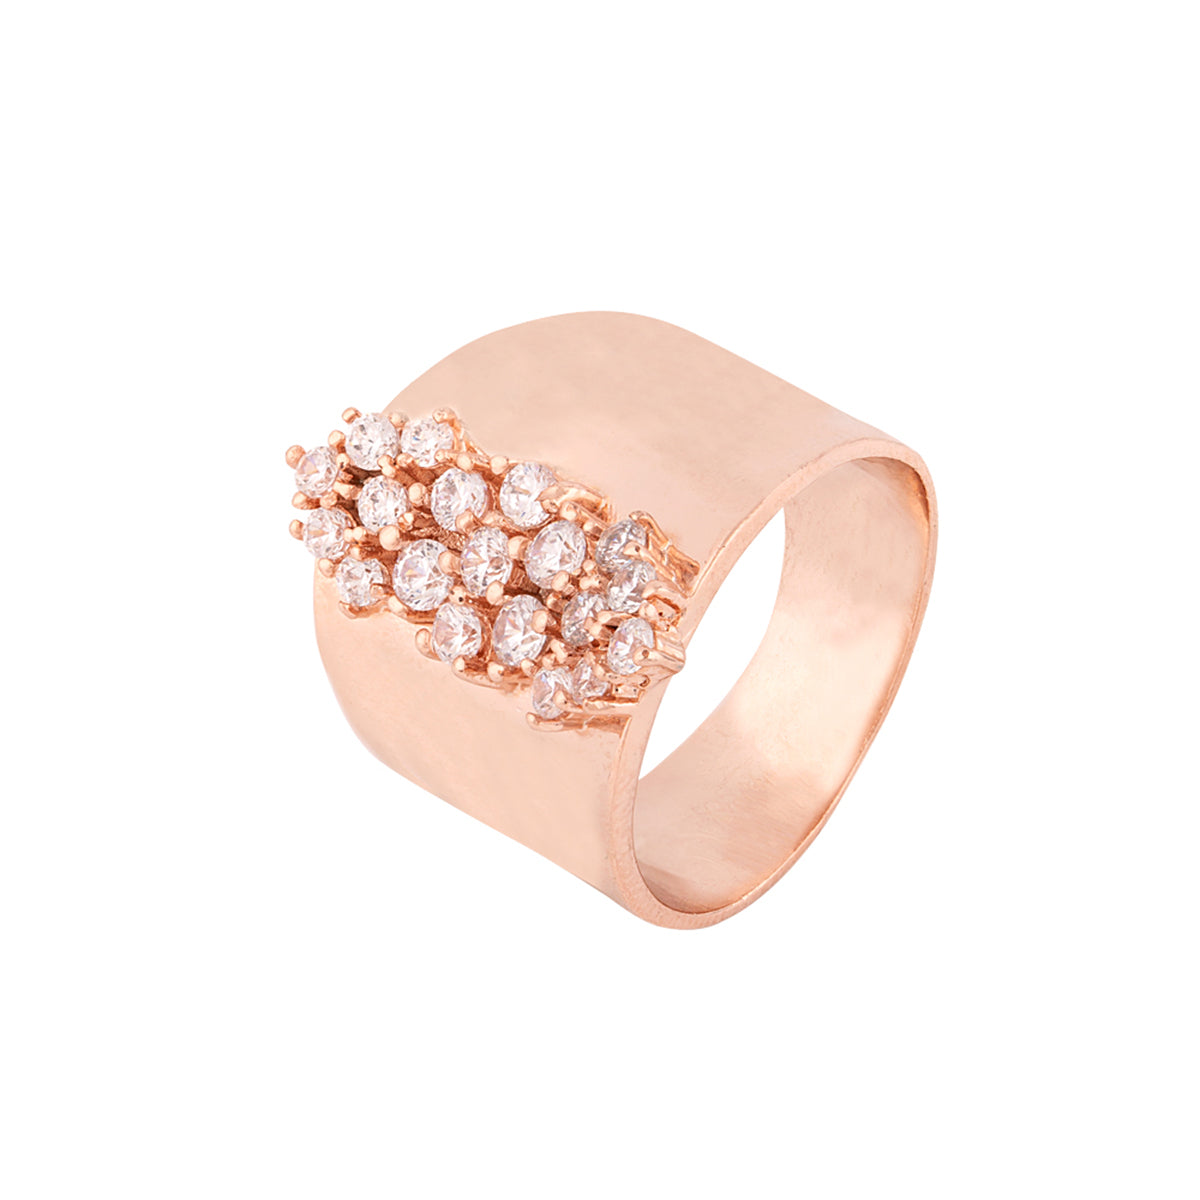 Grapevine Design American Diamond Gems Adorned Ring